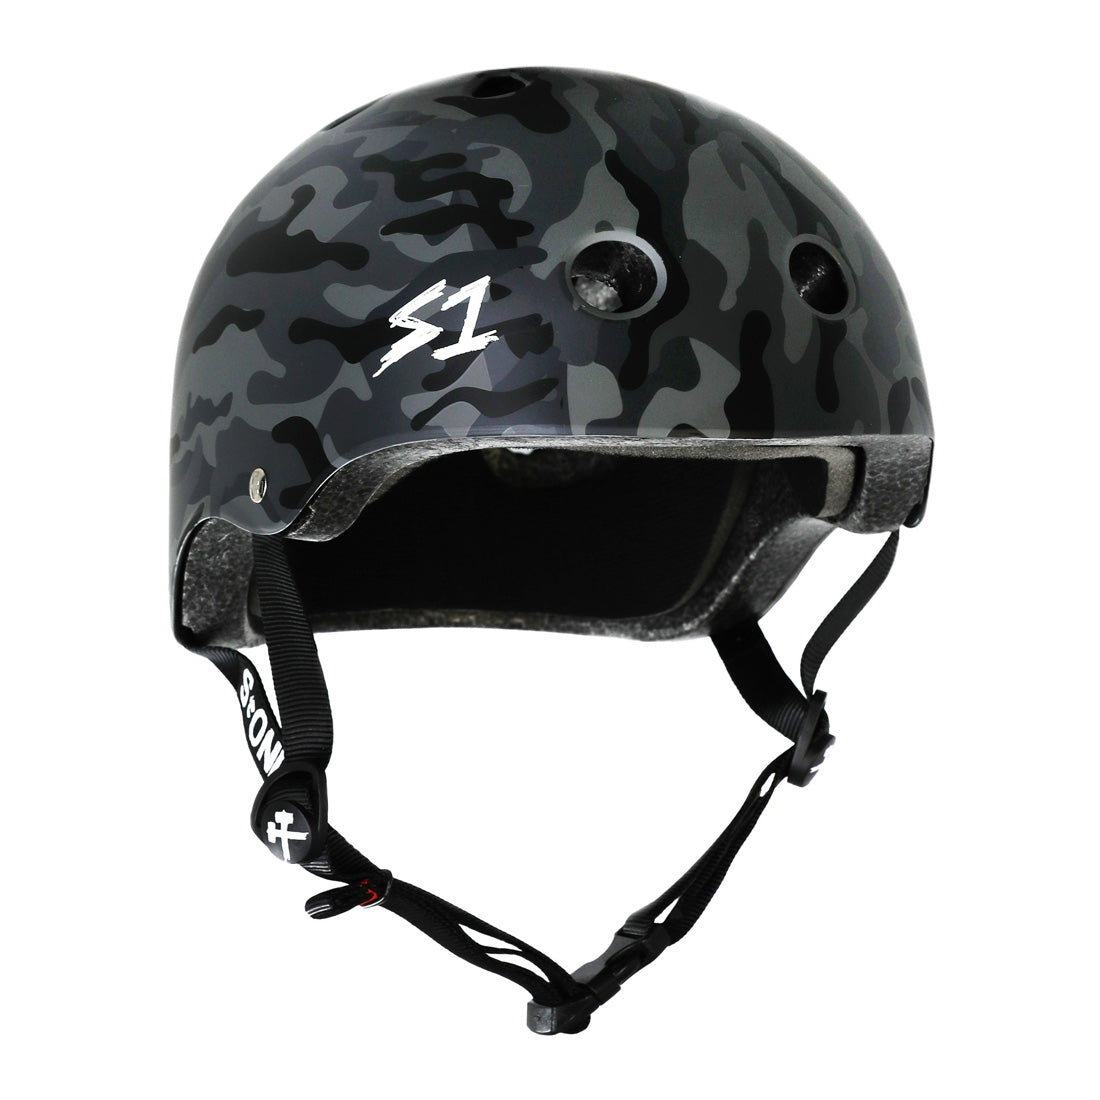 S-One Lifer Helmet - Camo Black Matte Helmets